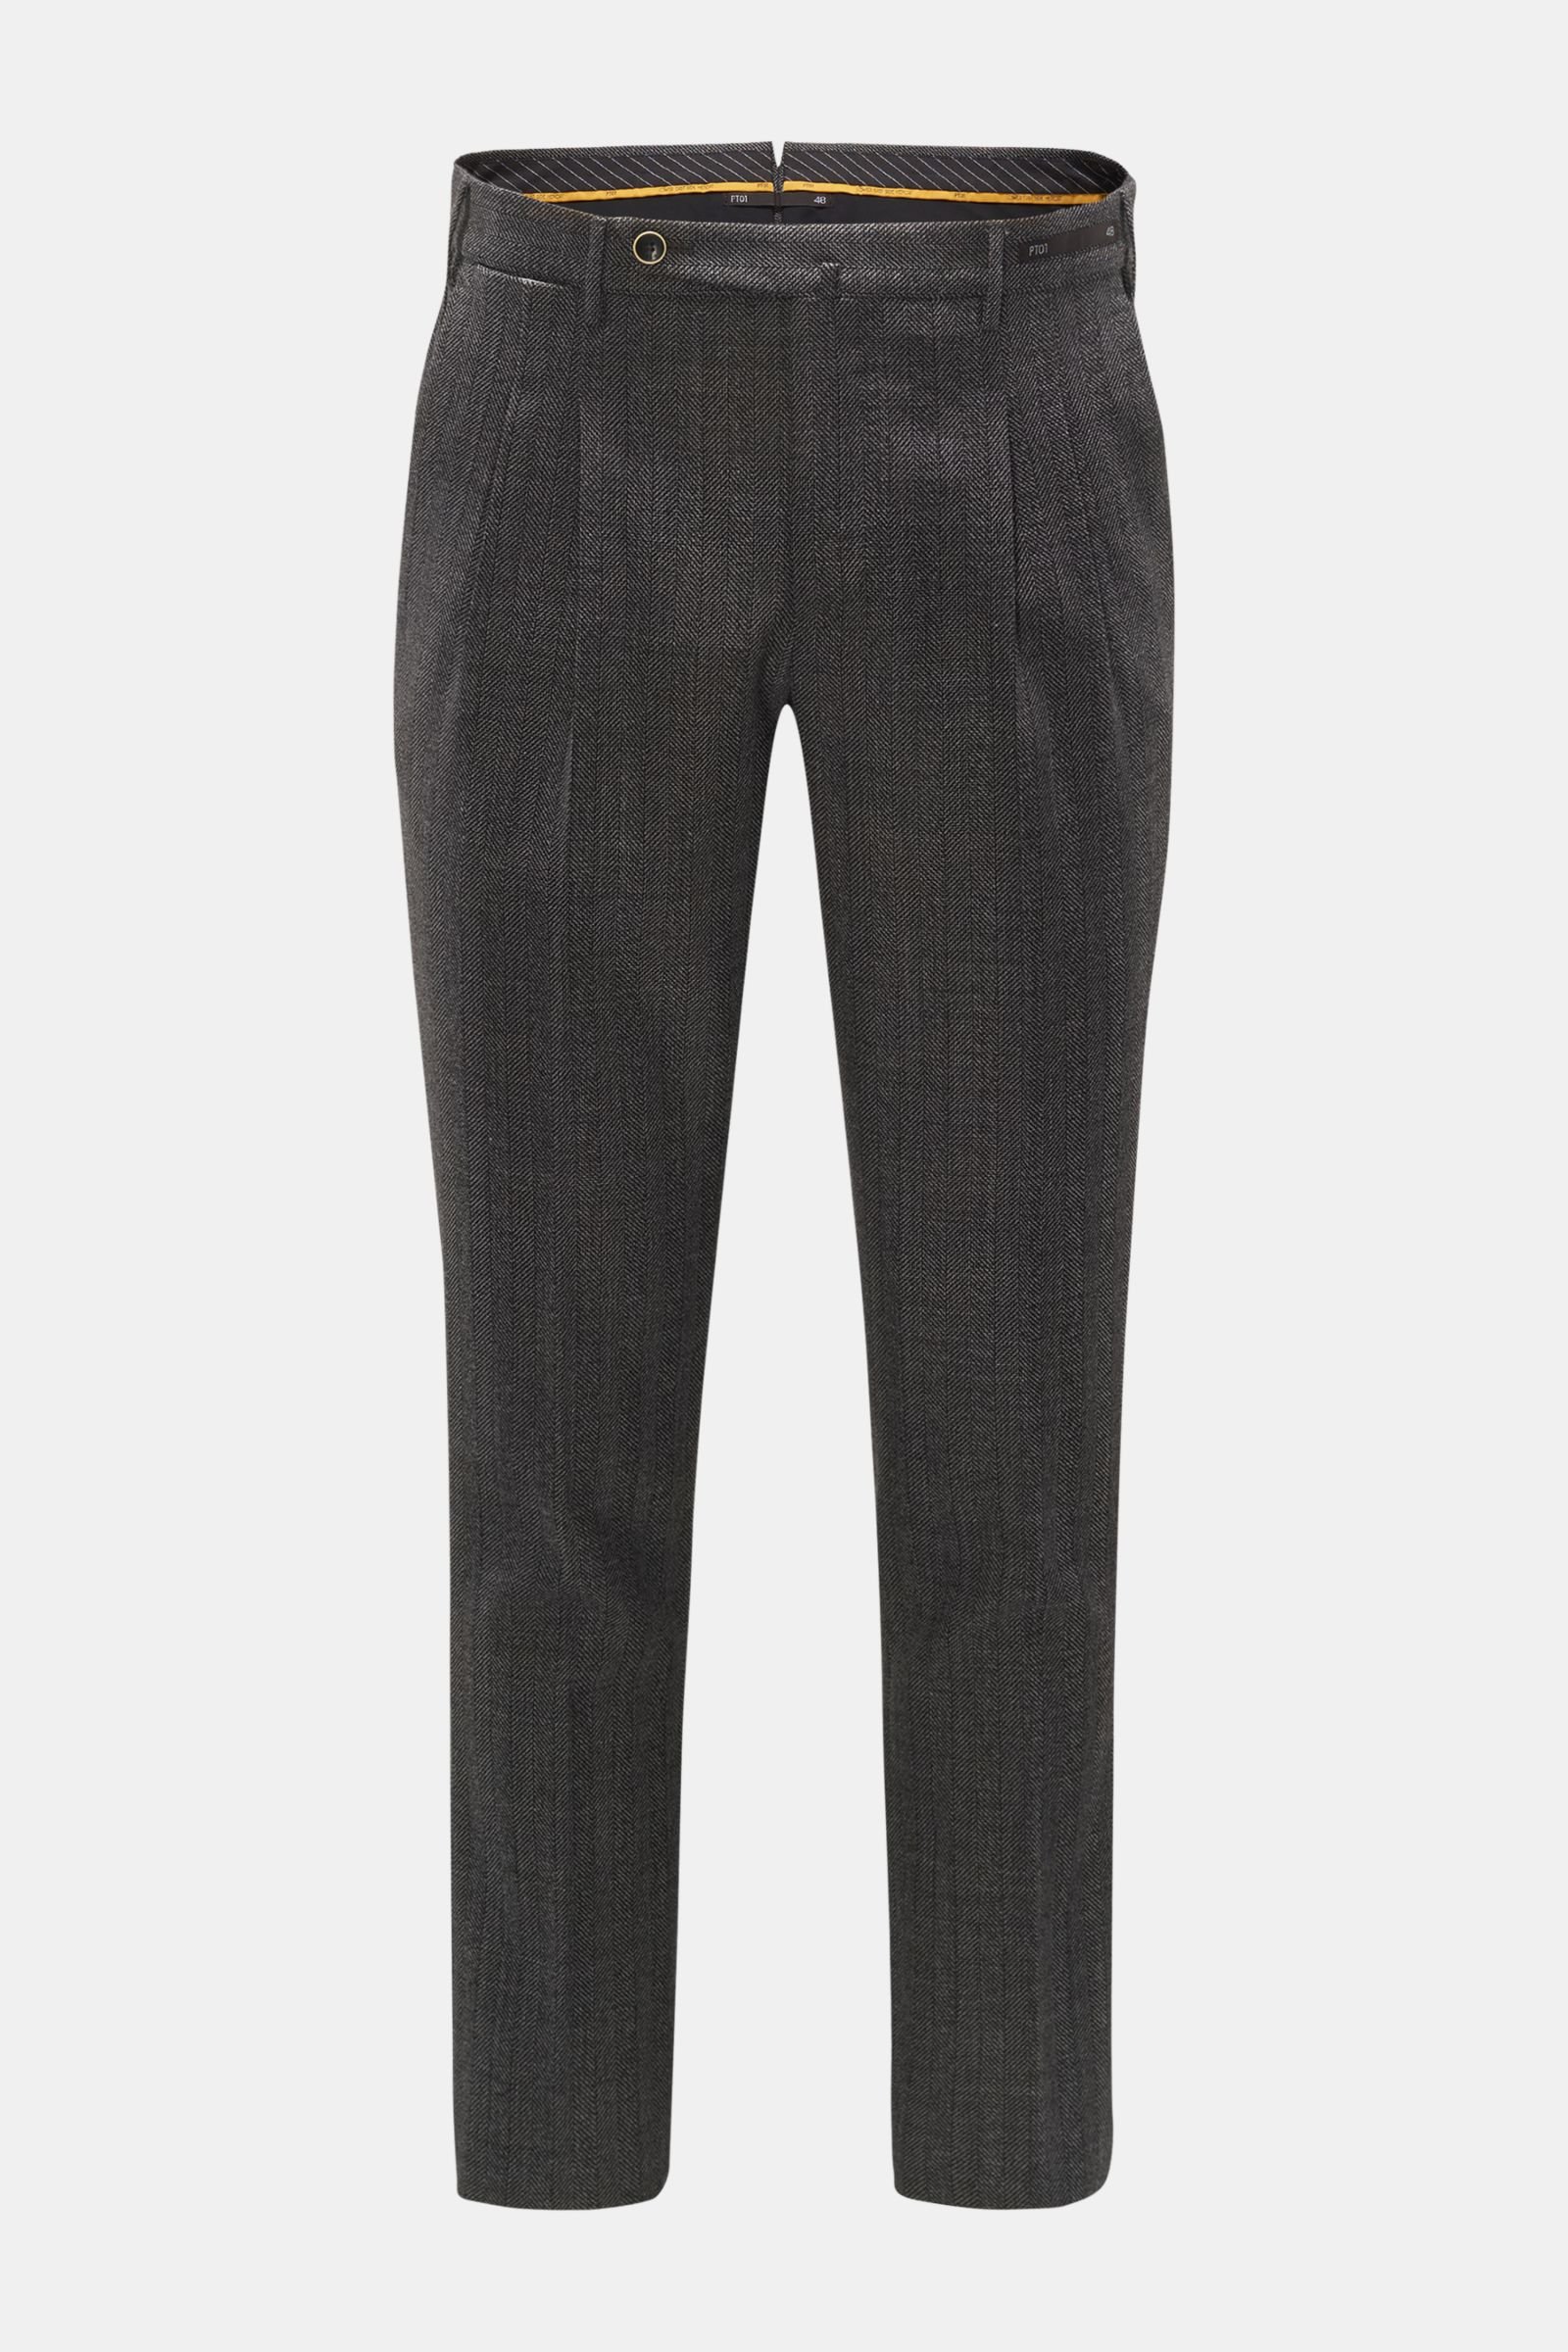 Wool trousers 'Preppy Fit' dark grey patterned